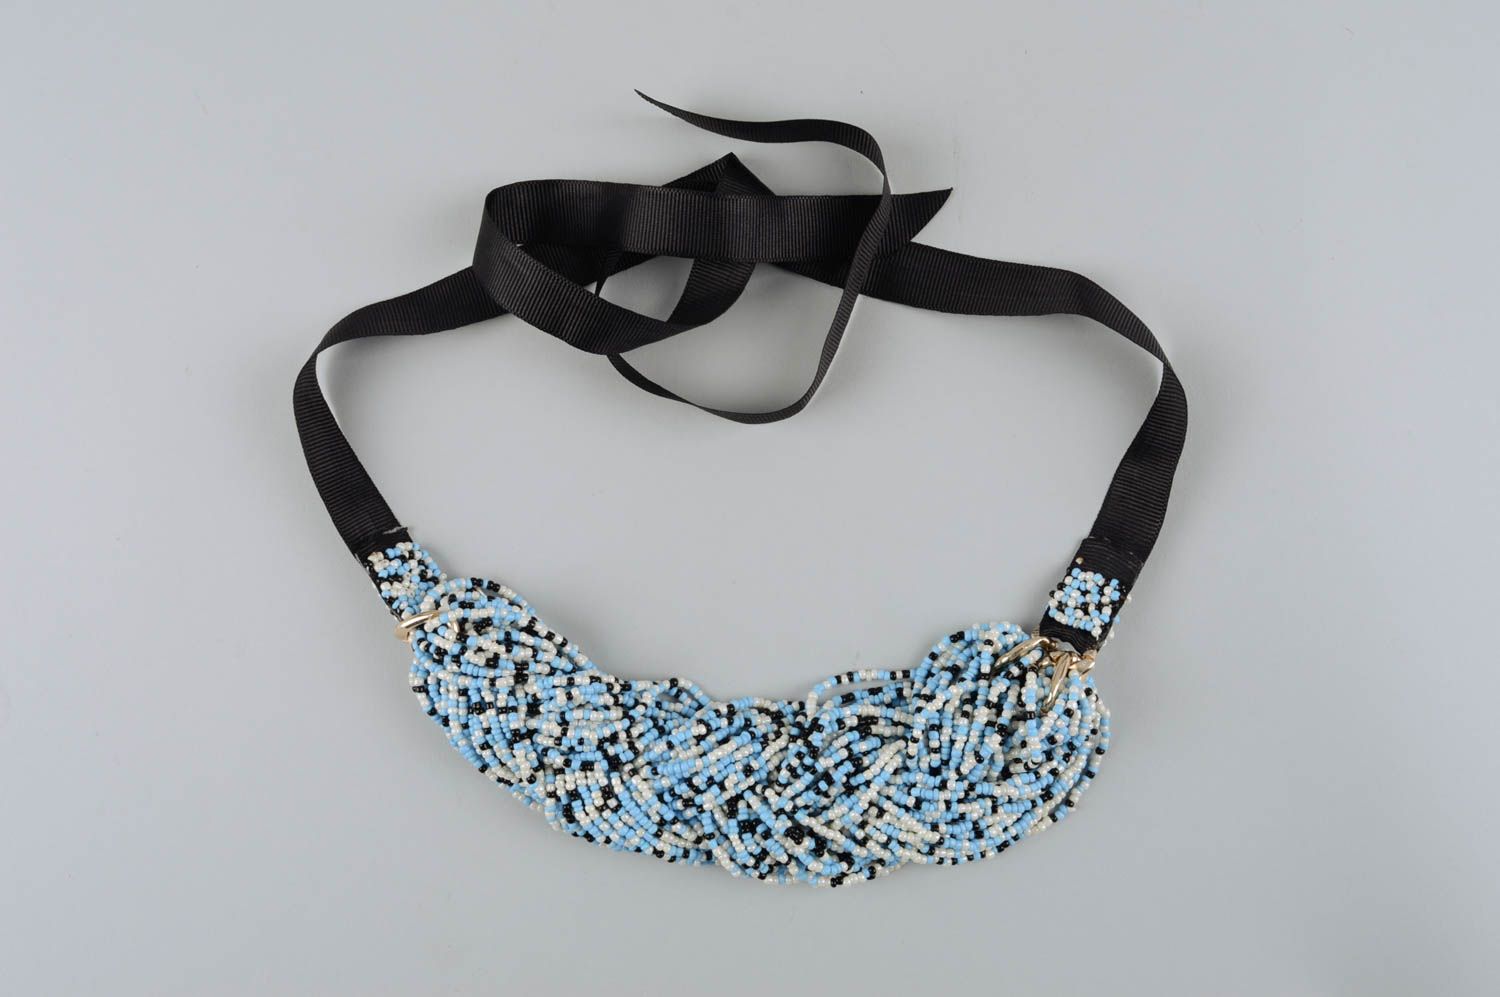 Stylish handmade beaded necklace artisan jewelry designs fashion accessories photo 5